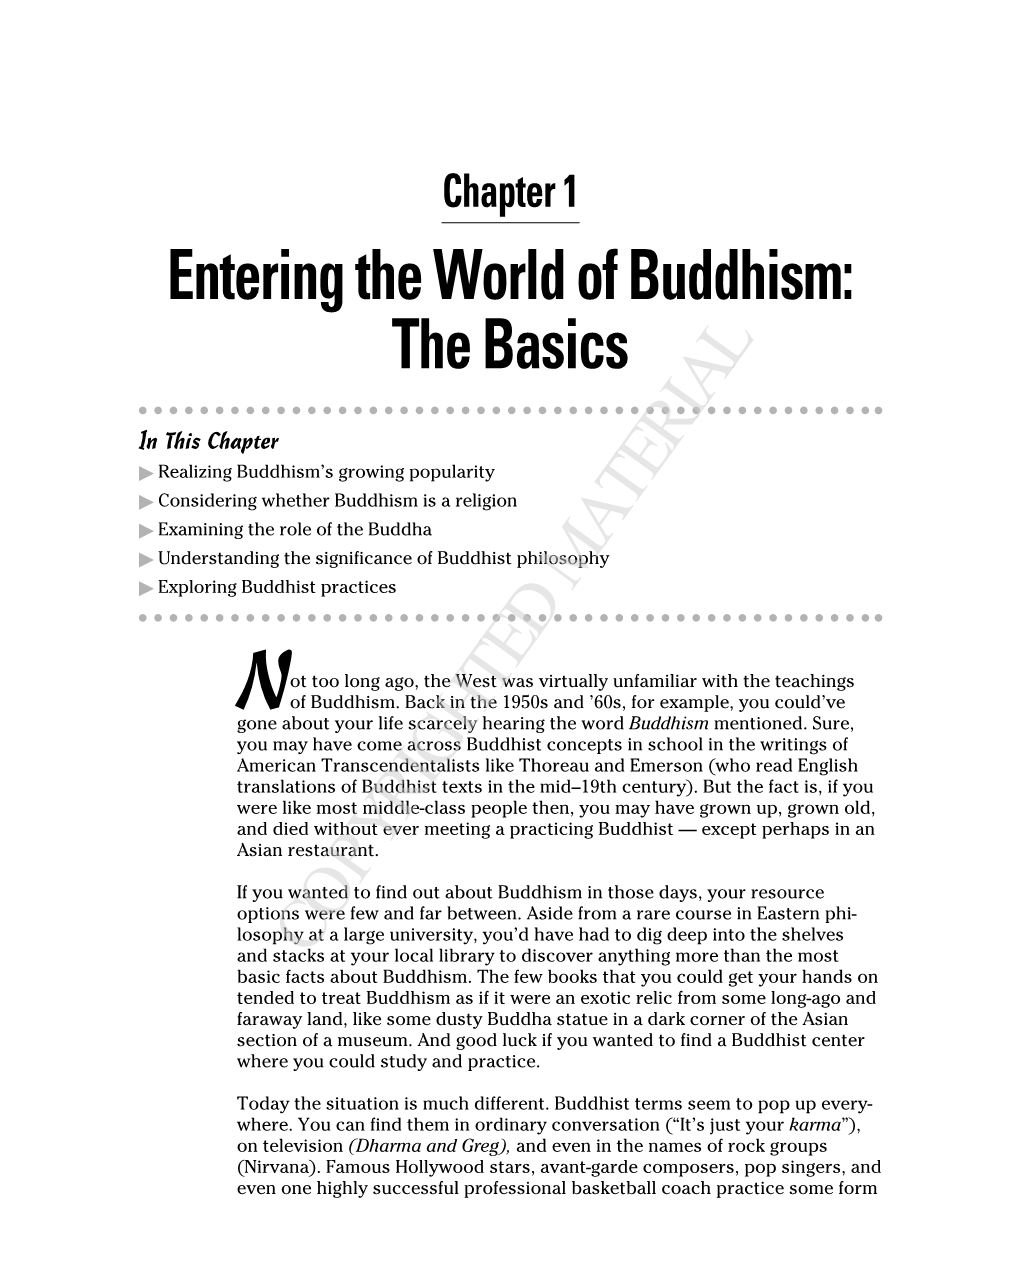 Entering the World of Buddhism: the Basics